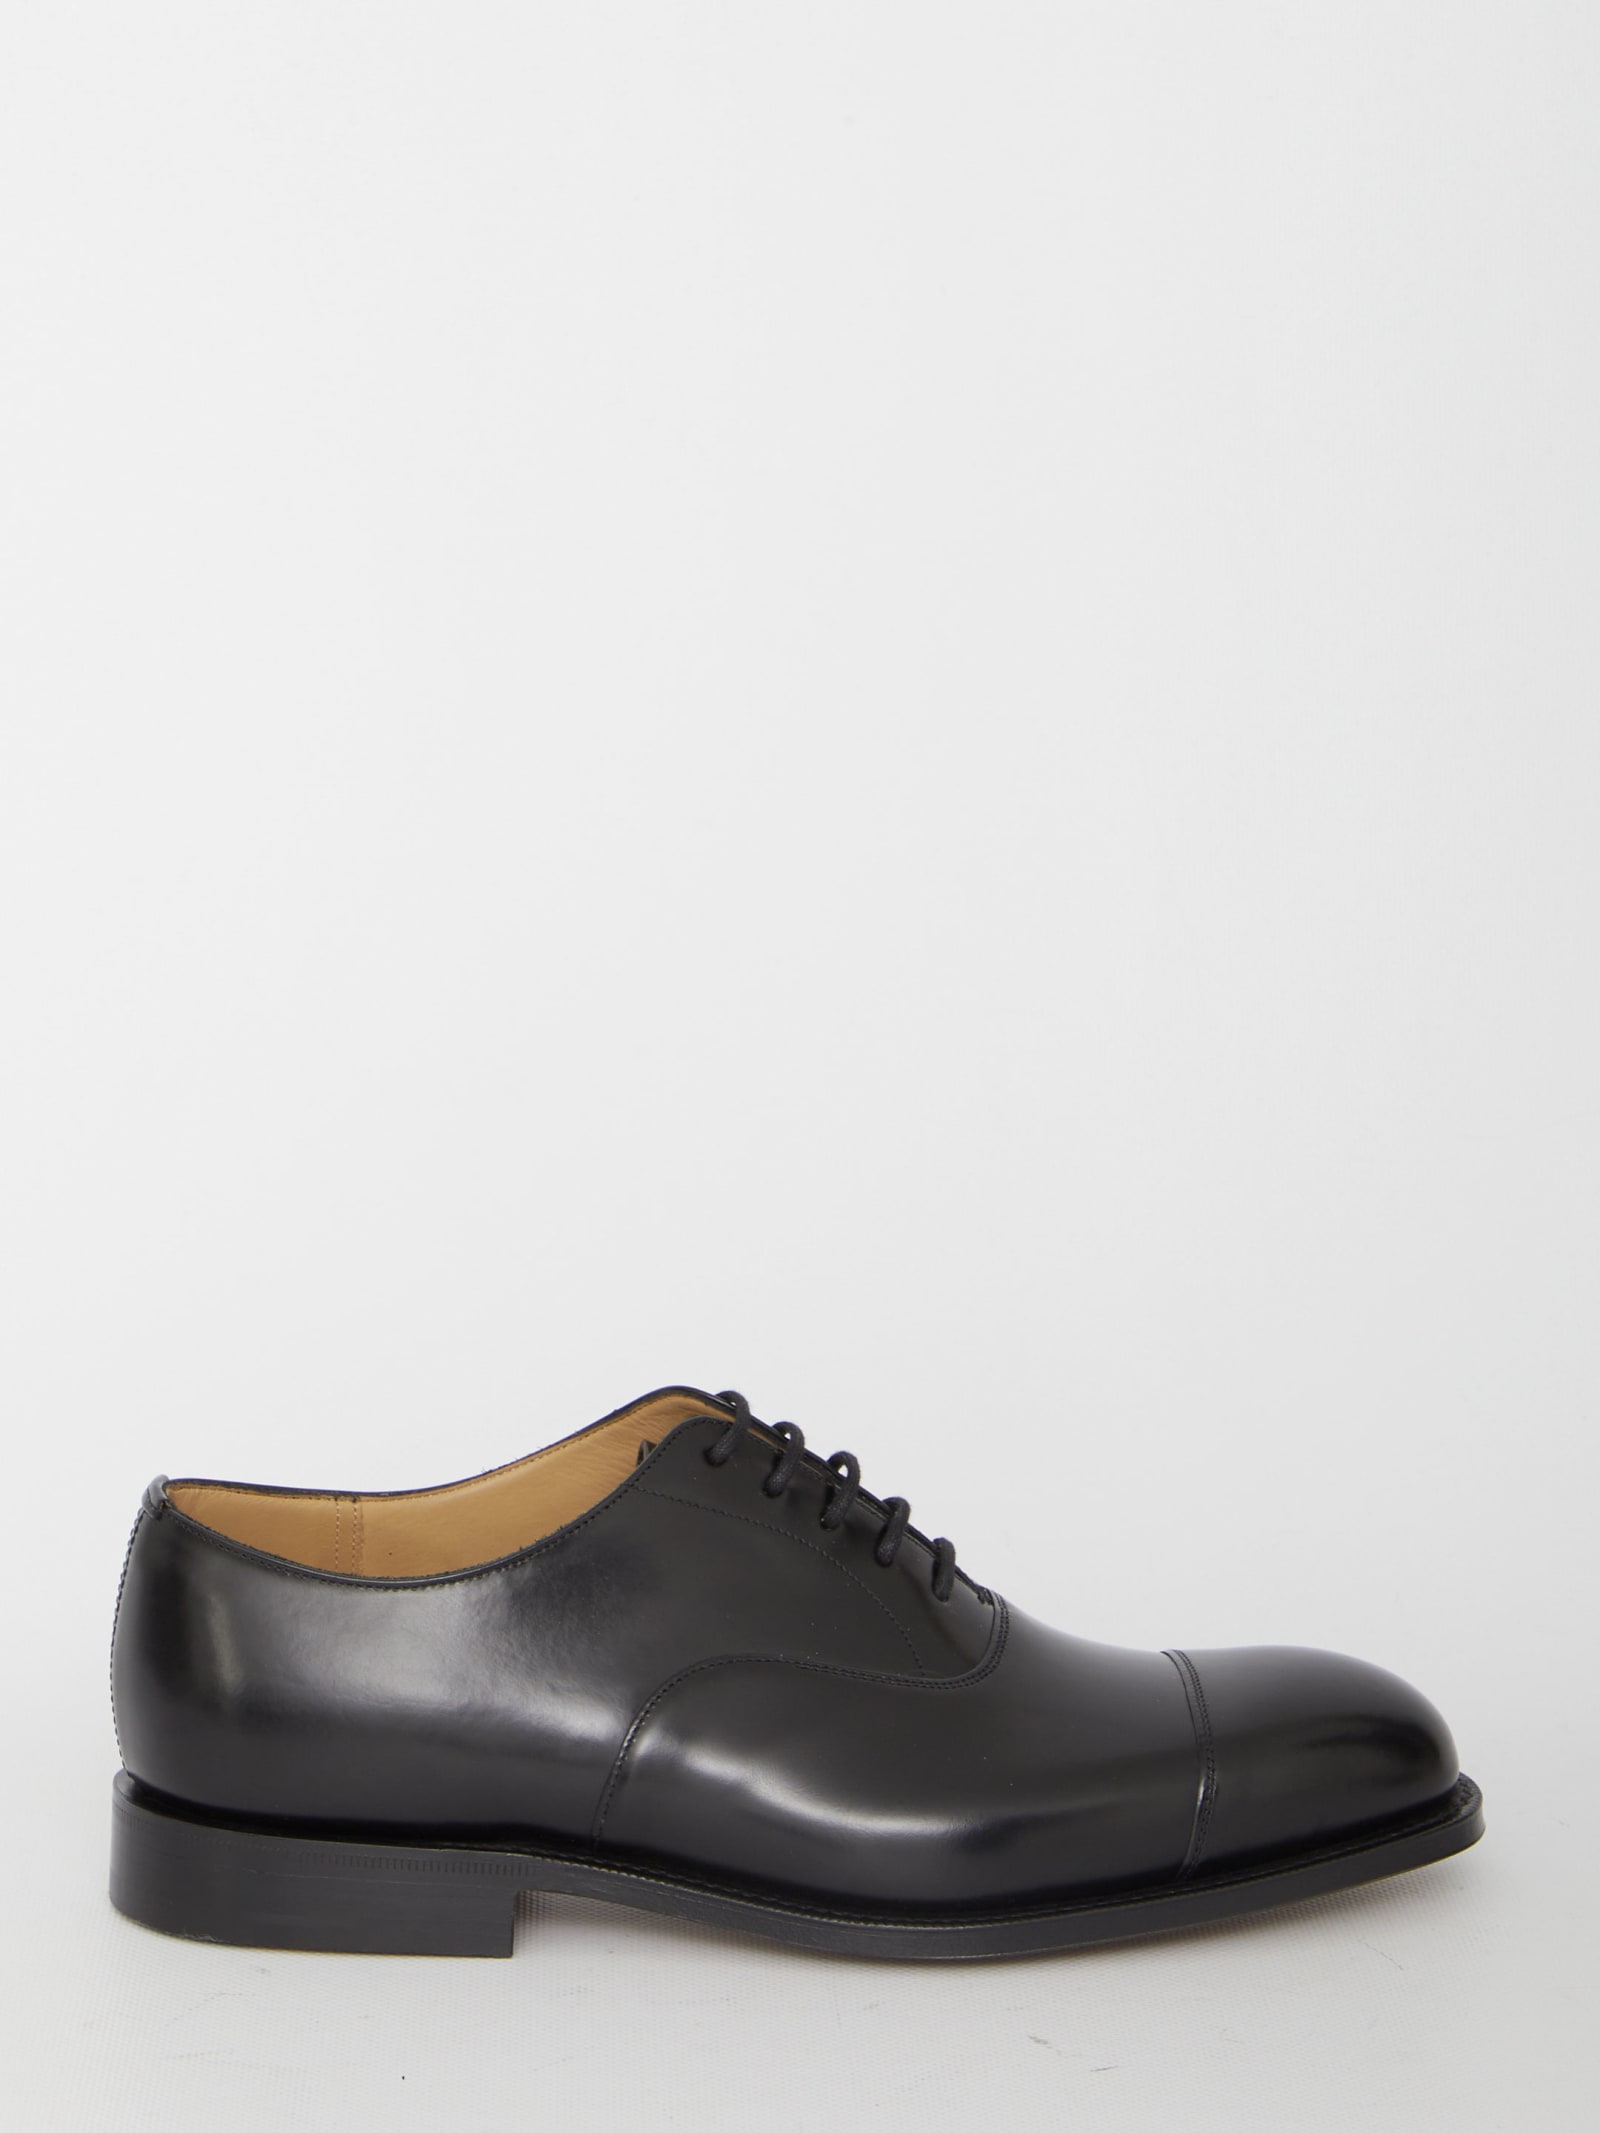 Consul 173 Oxford Shoes